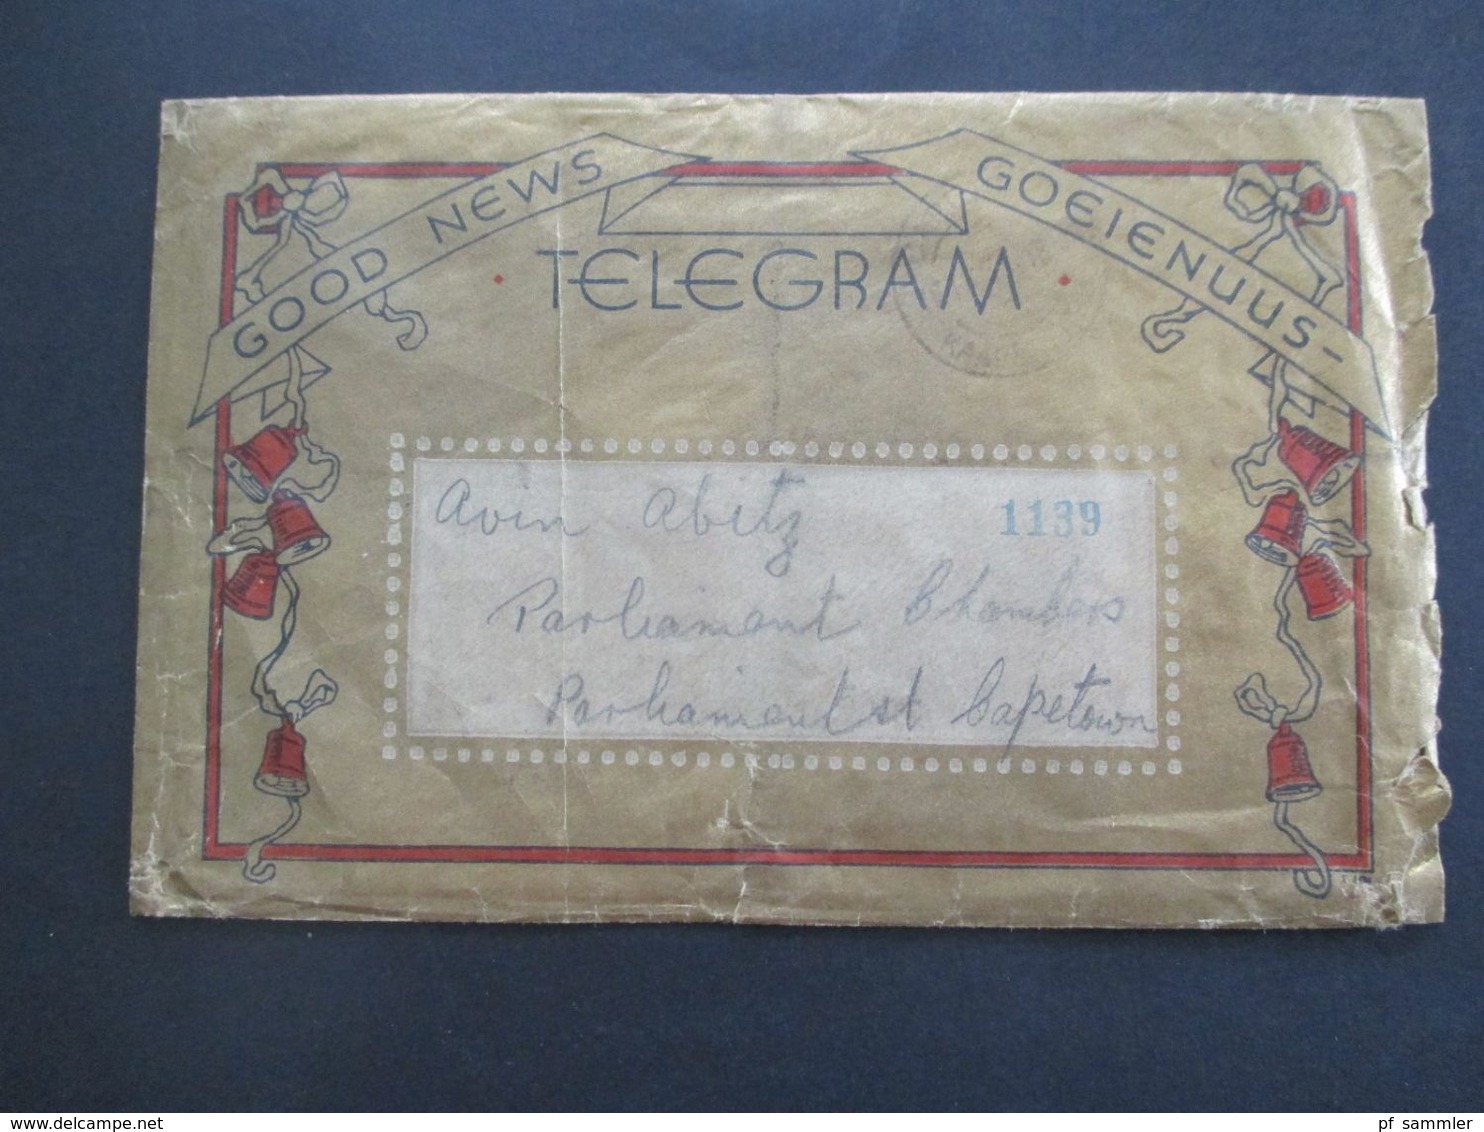 Südafrika Um 1930 ?! Telegram Goldener Umschlag Good News / Goeienuus An Das Parliament Capetown - Cartas